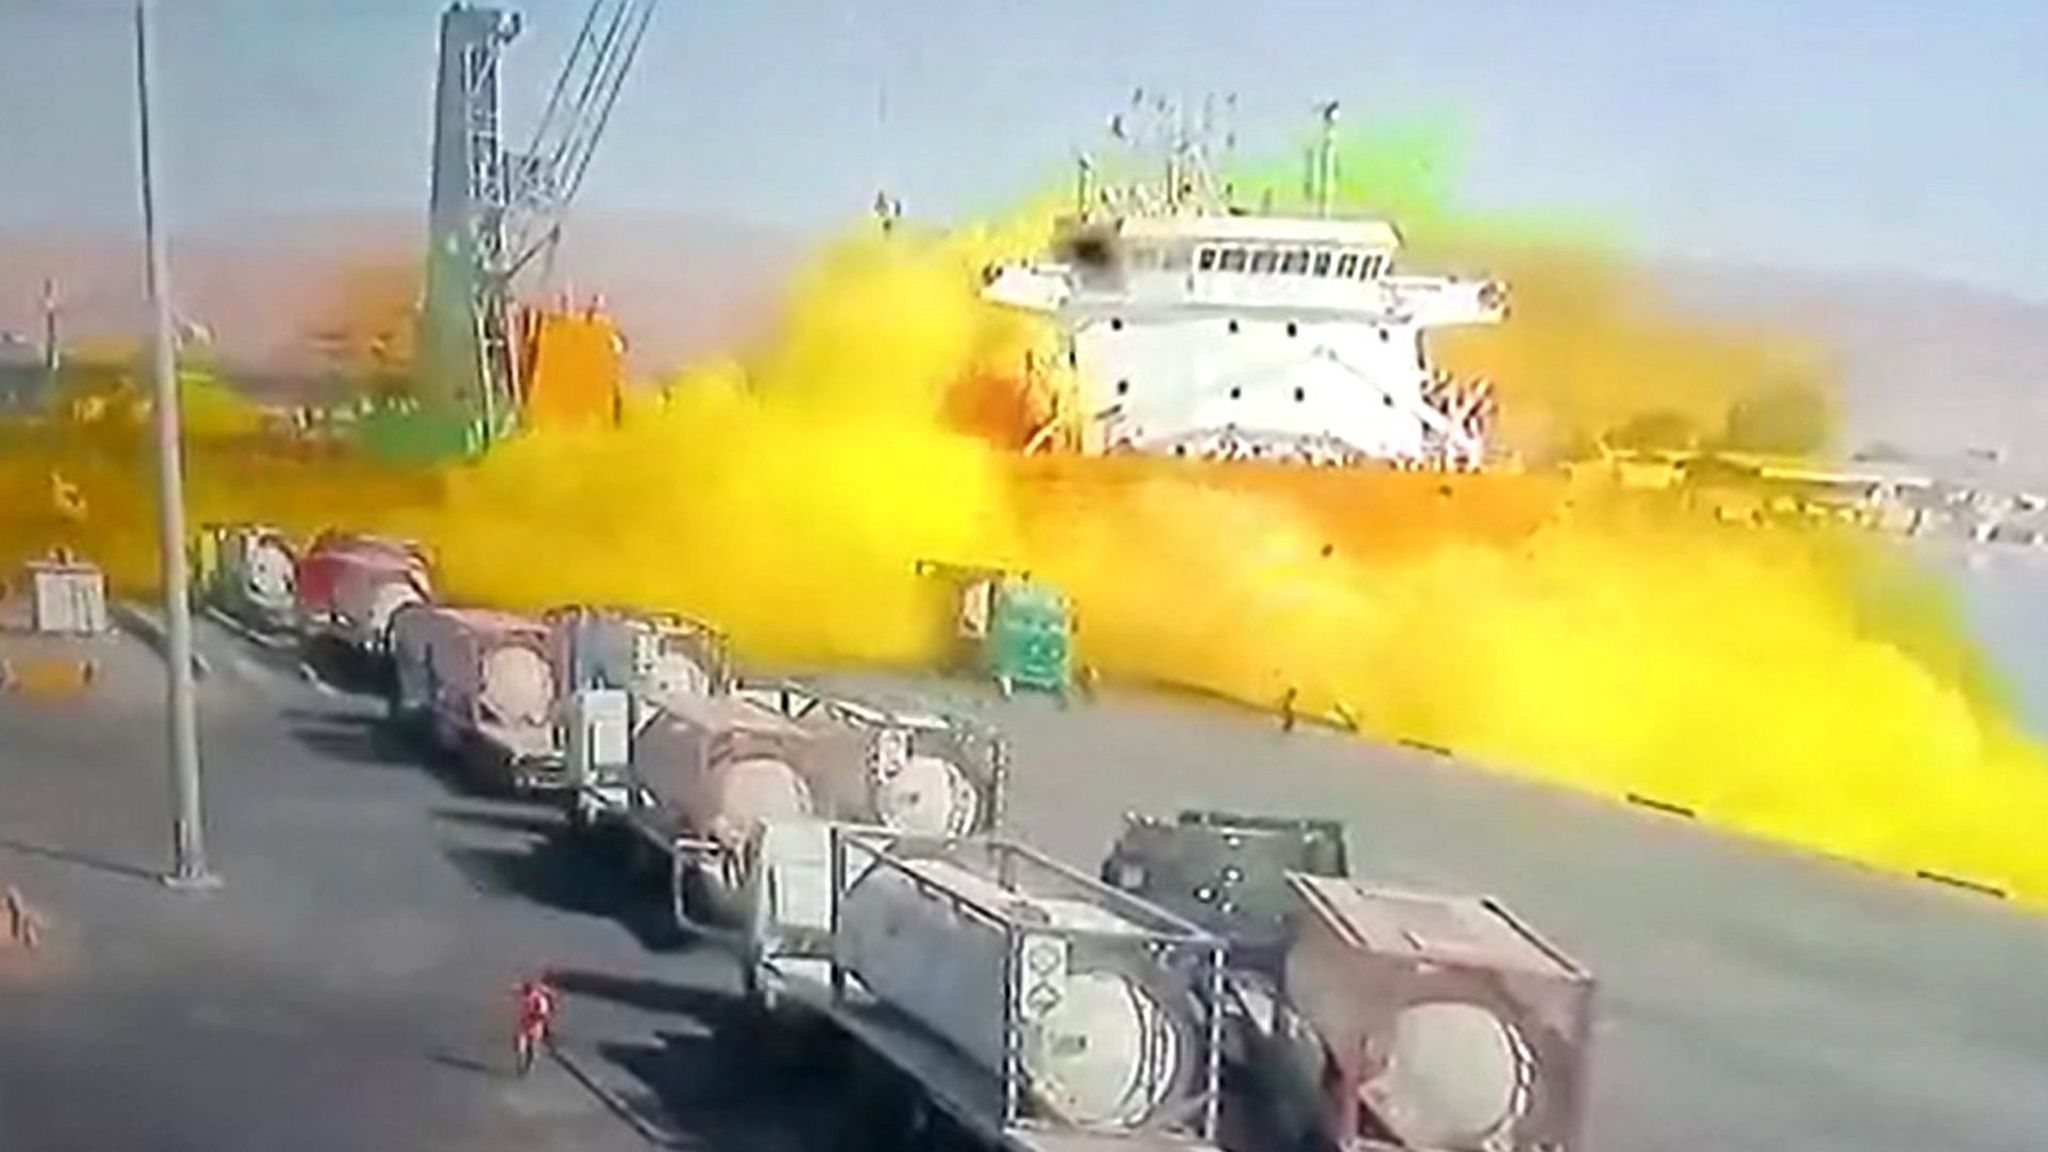 Toxic gas leak at Aqaba port 13, injures hundreds - BBC